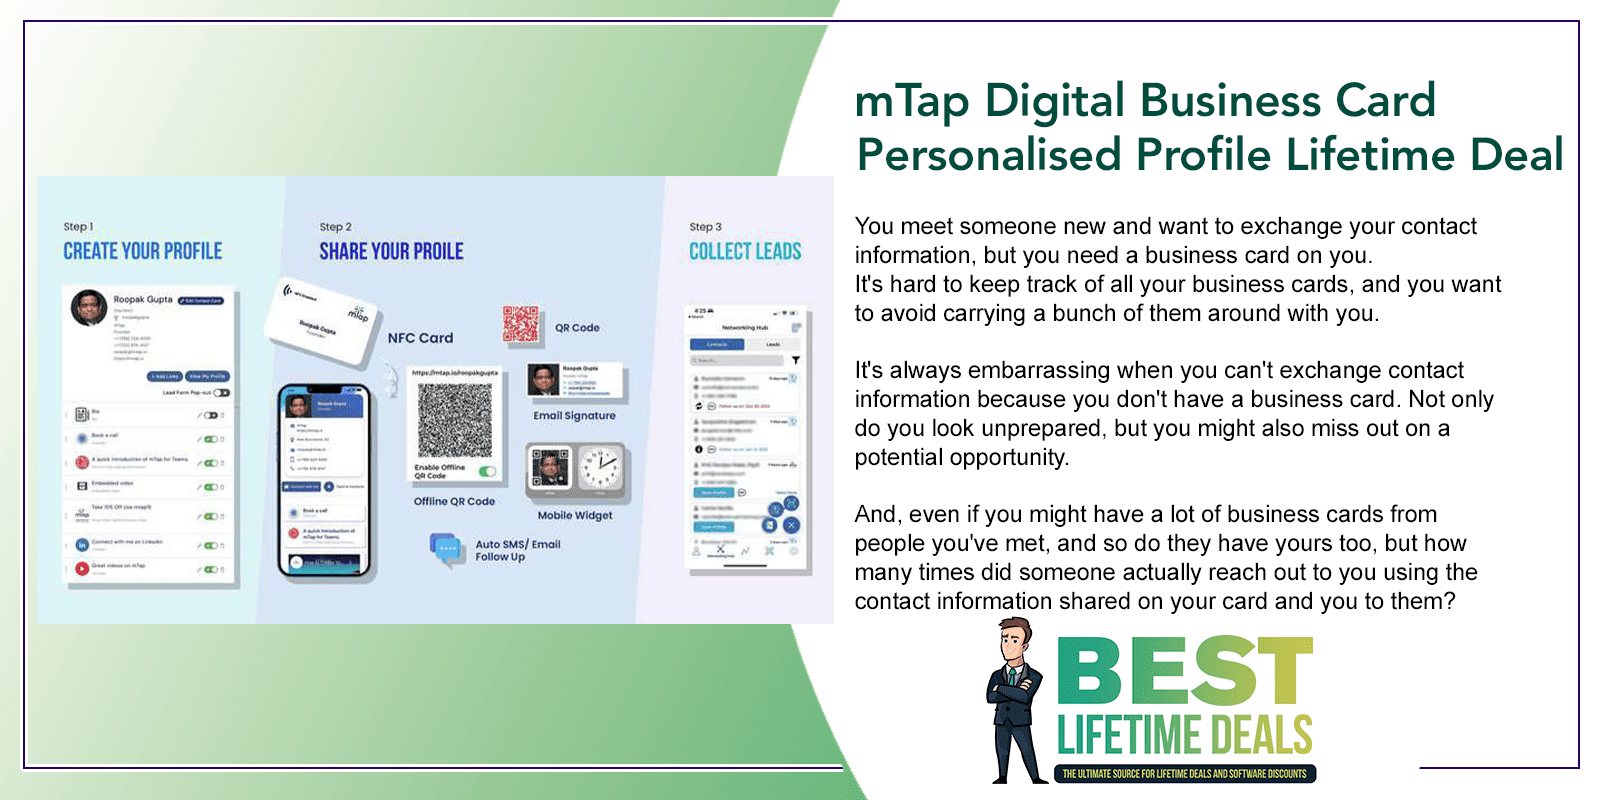 mTap Digital Business Card Personalised Profile Lifetime Deal